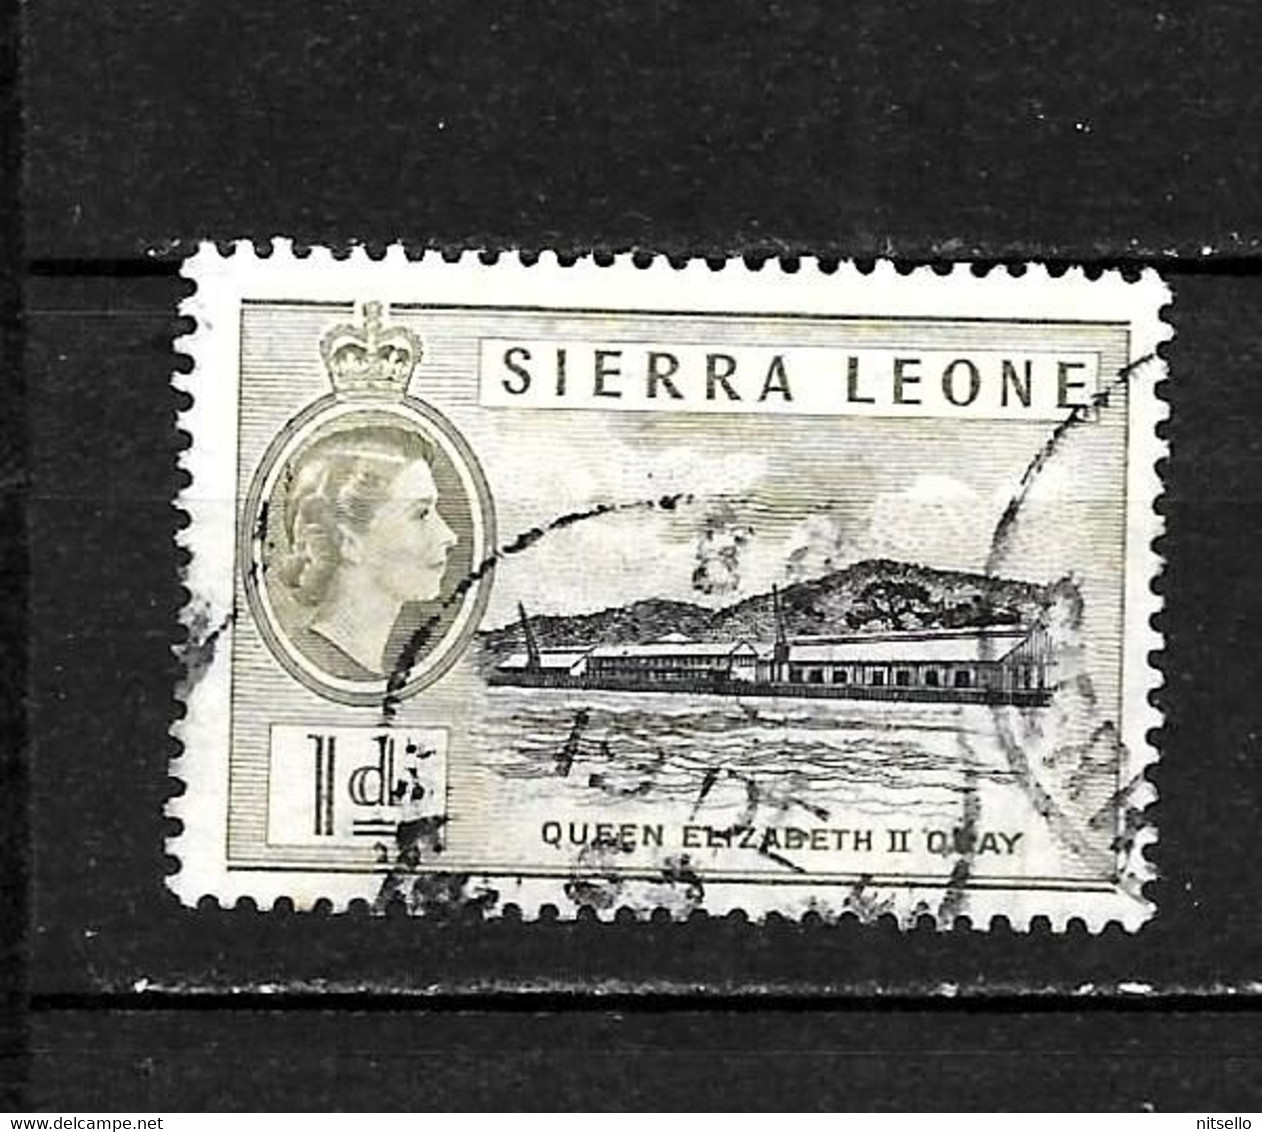 LOTE 2219A ///  SIERRA LEONA   (o) / *MH  - ¡¡¡ OFERTA - LIQUIDATION - JE LIQUIDE !!! - Sierra Leone (...-1960)